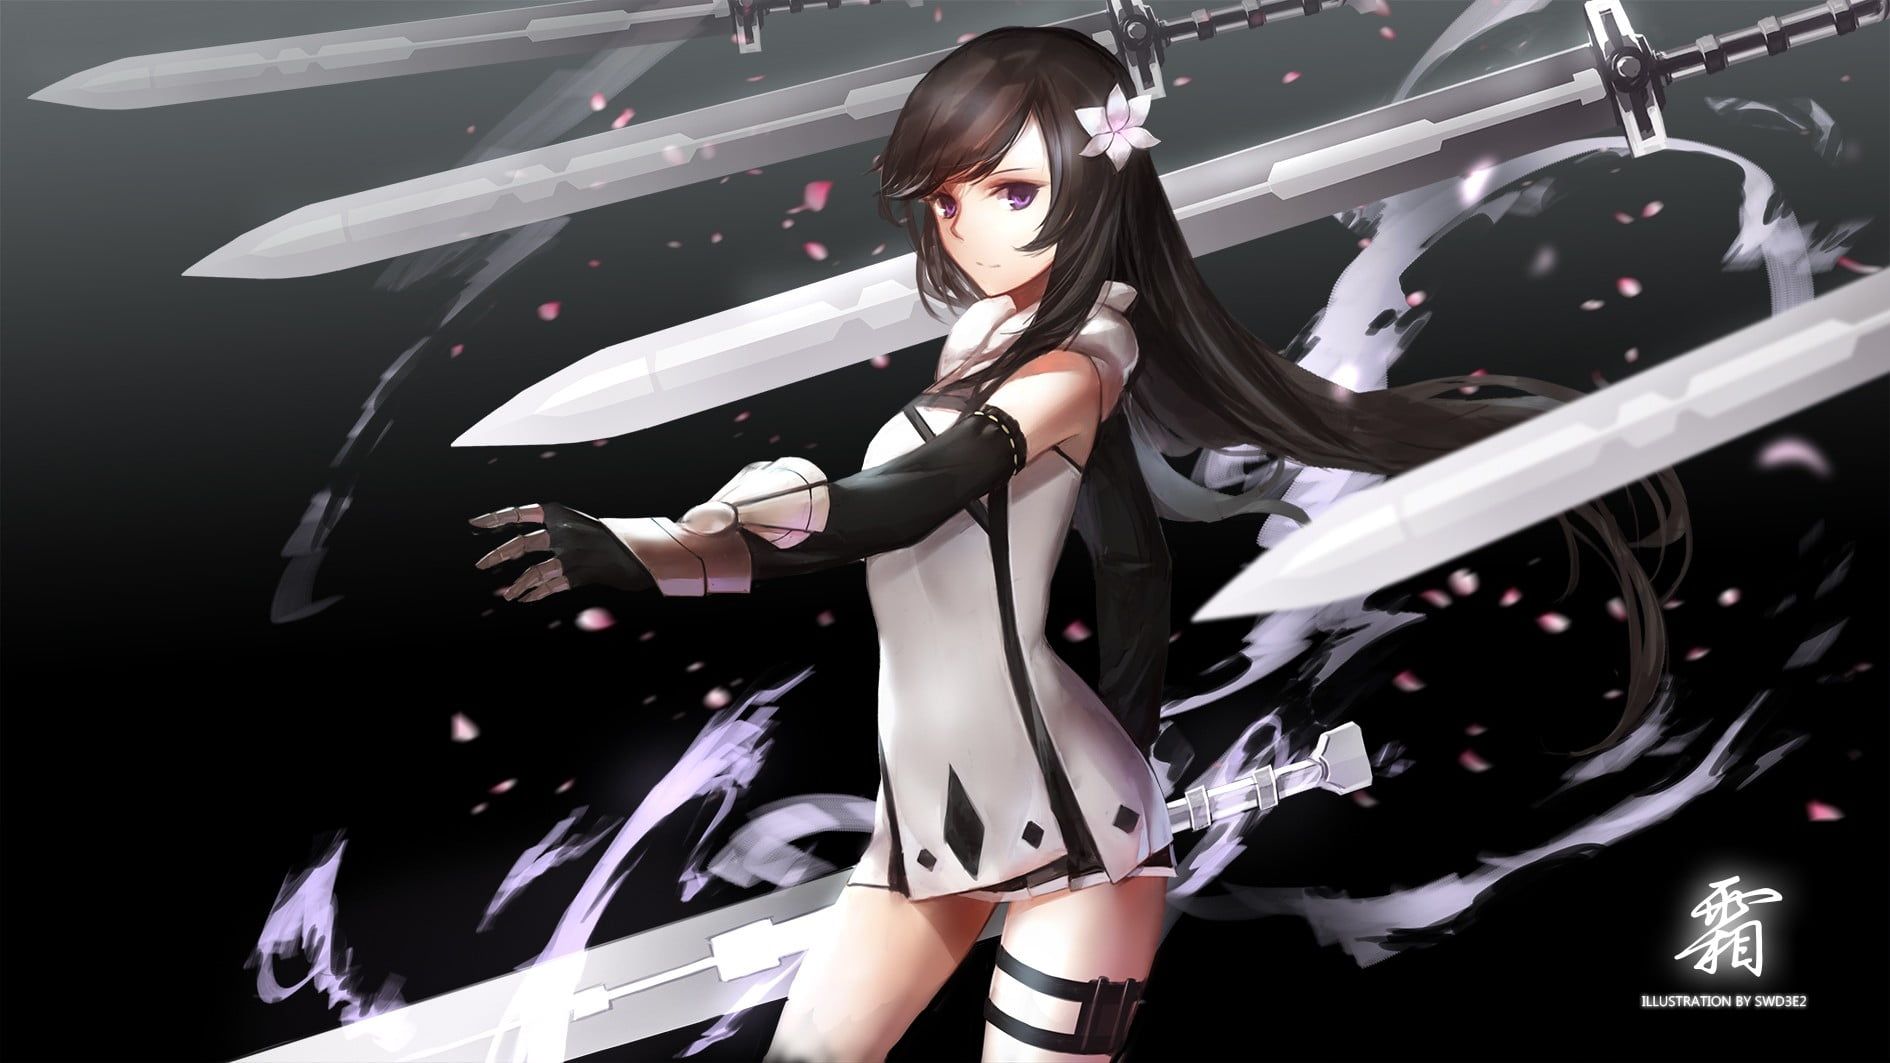 Anime Girl With Sword Wallpaper